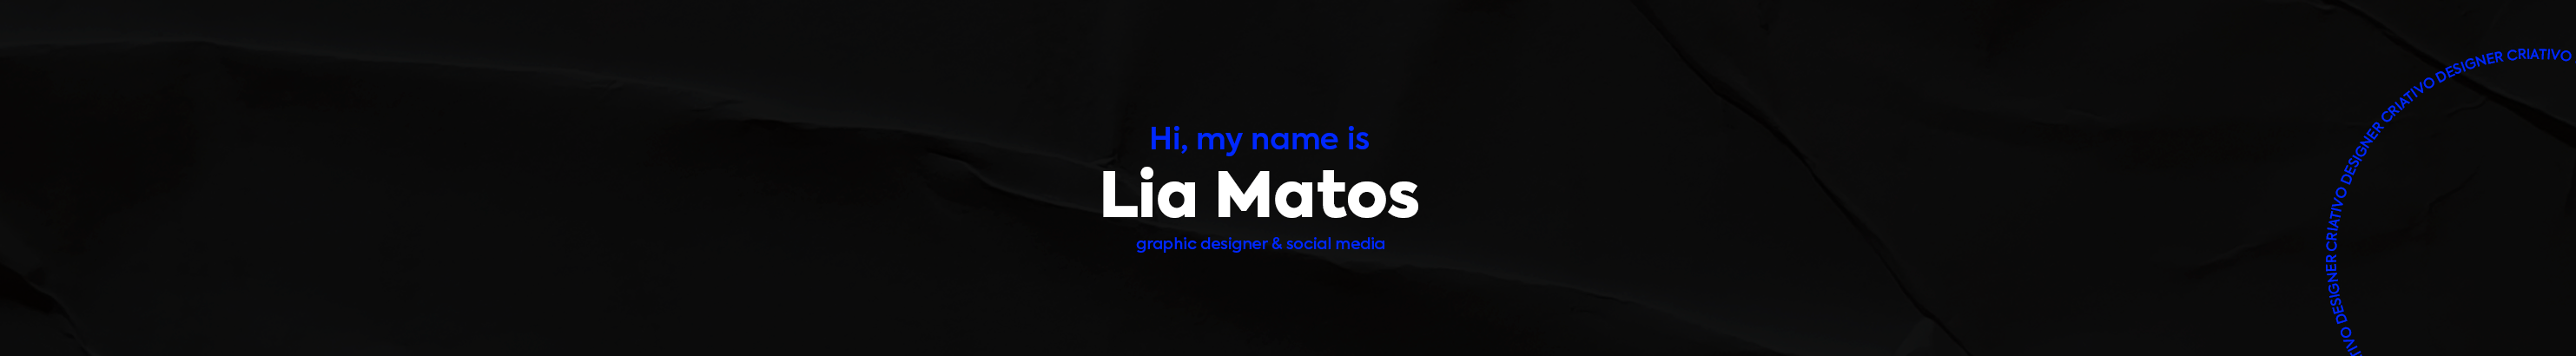 Banner de perfil de Lia Matos